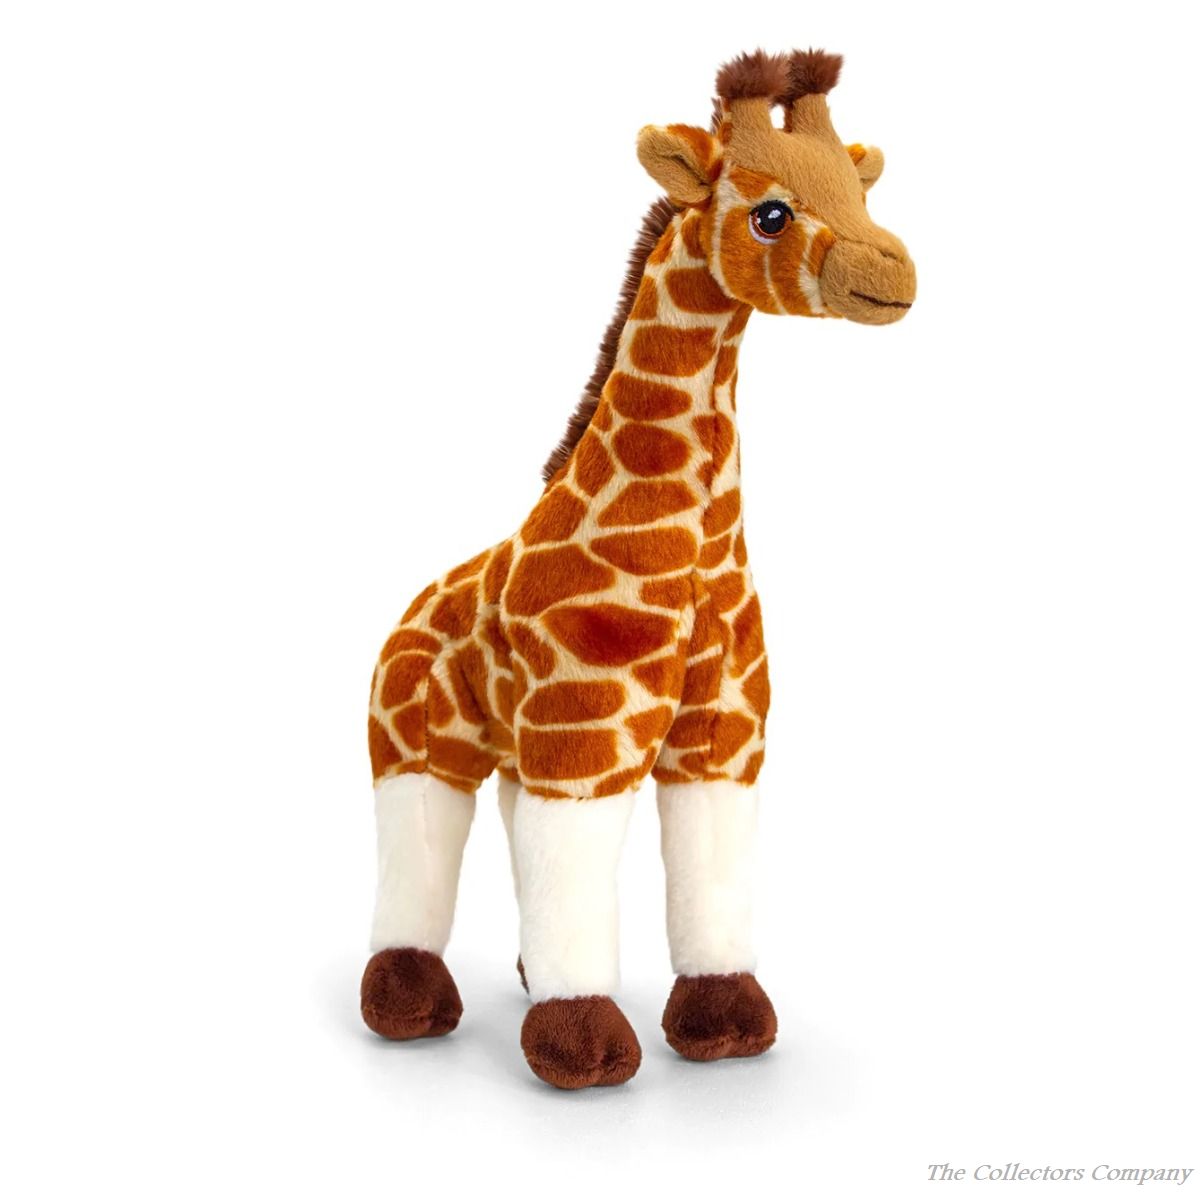 Keeleco Giraffe Soft Toy 30cm By Keel Toys SE6124